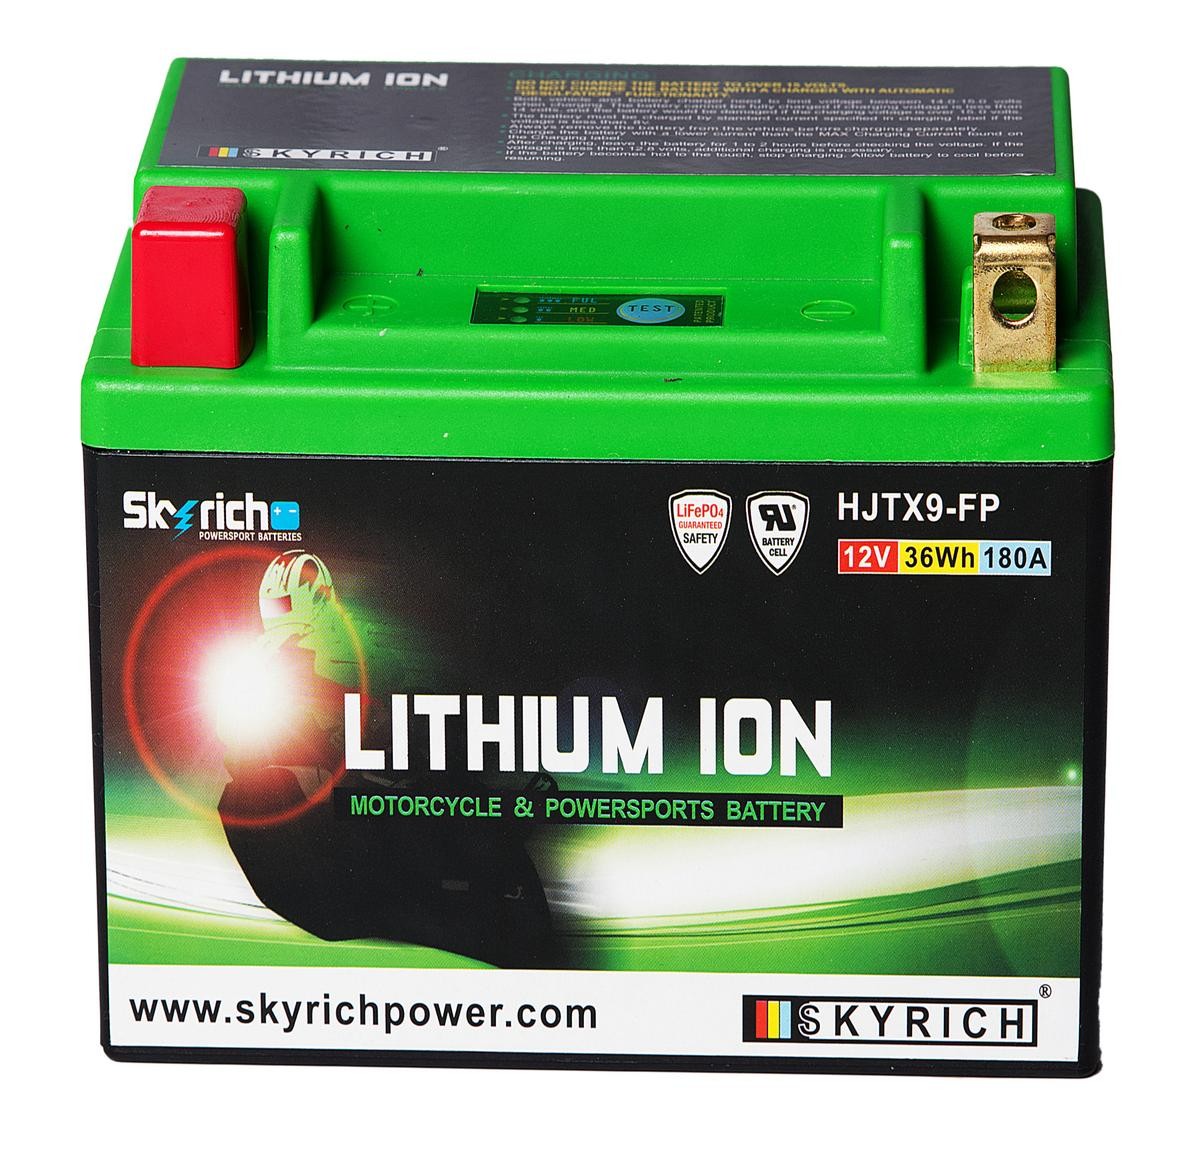 SKYRICH LITHIUM ION 12V 3Ah 180A N Li-Ion Battery Cold-test Current, EN: 180A, Voltage: 12V, Terminal Placement: 1 Starter battery HJTX9-FP buy